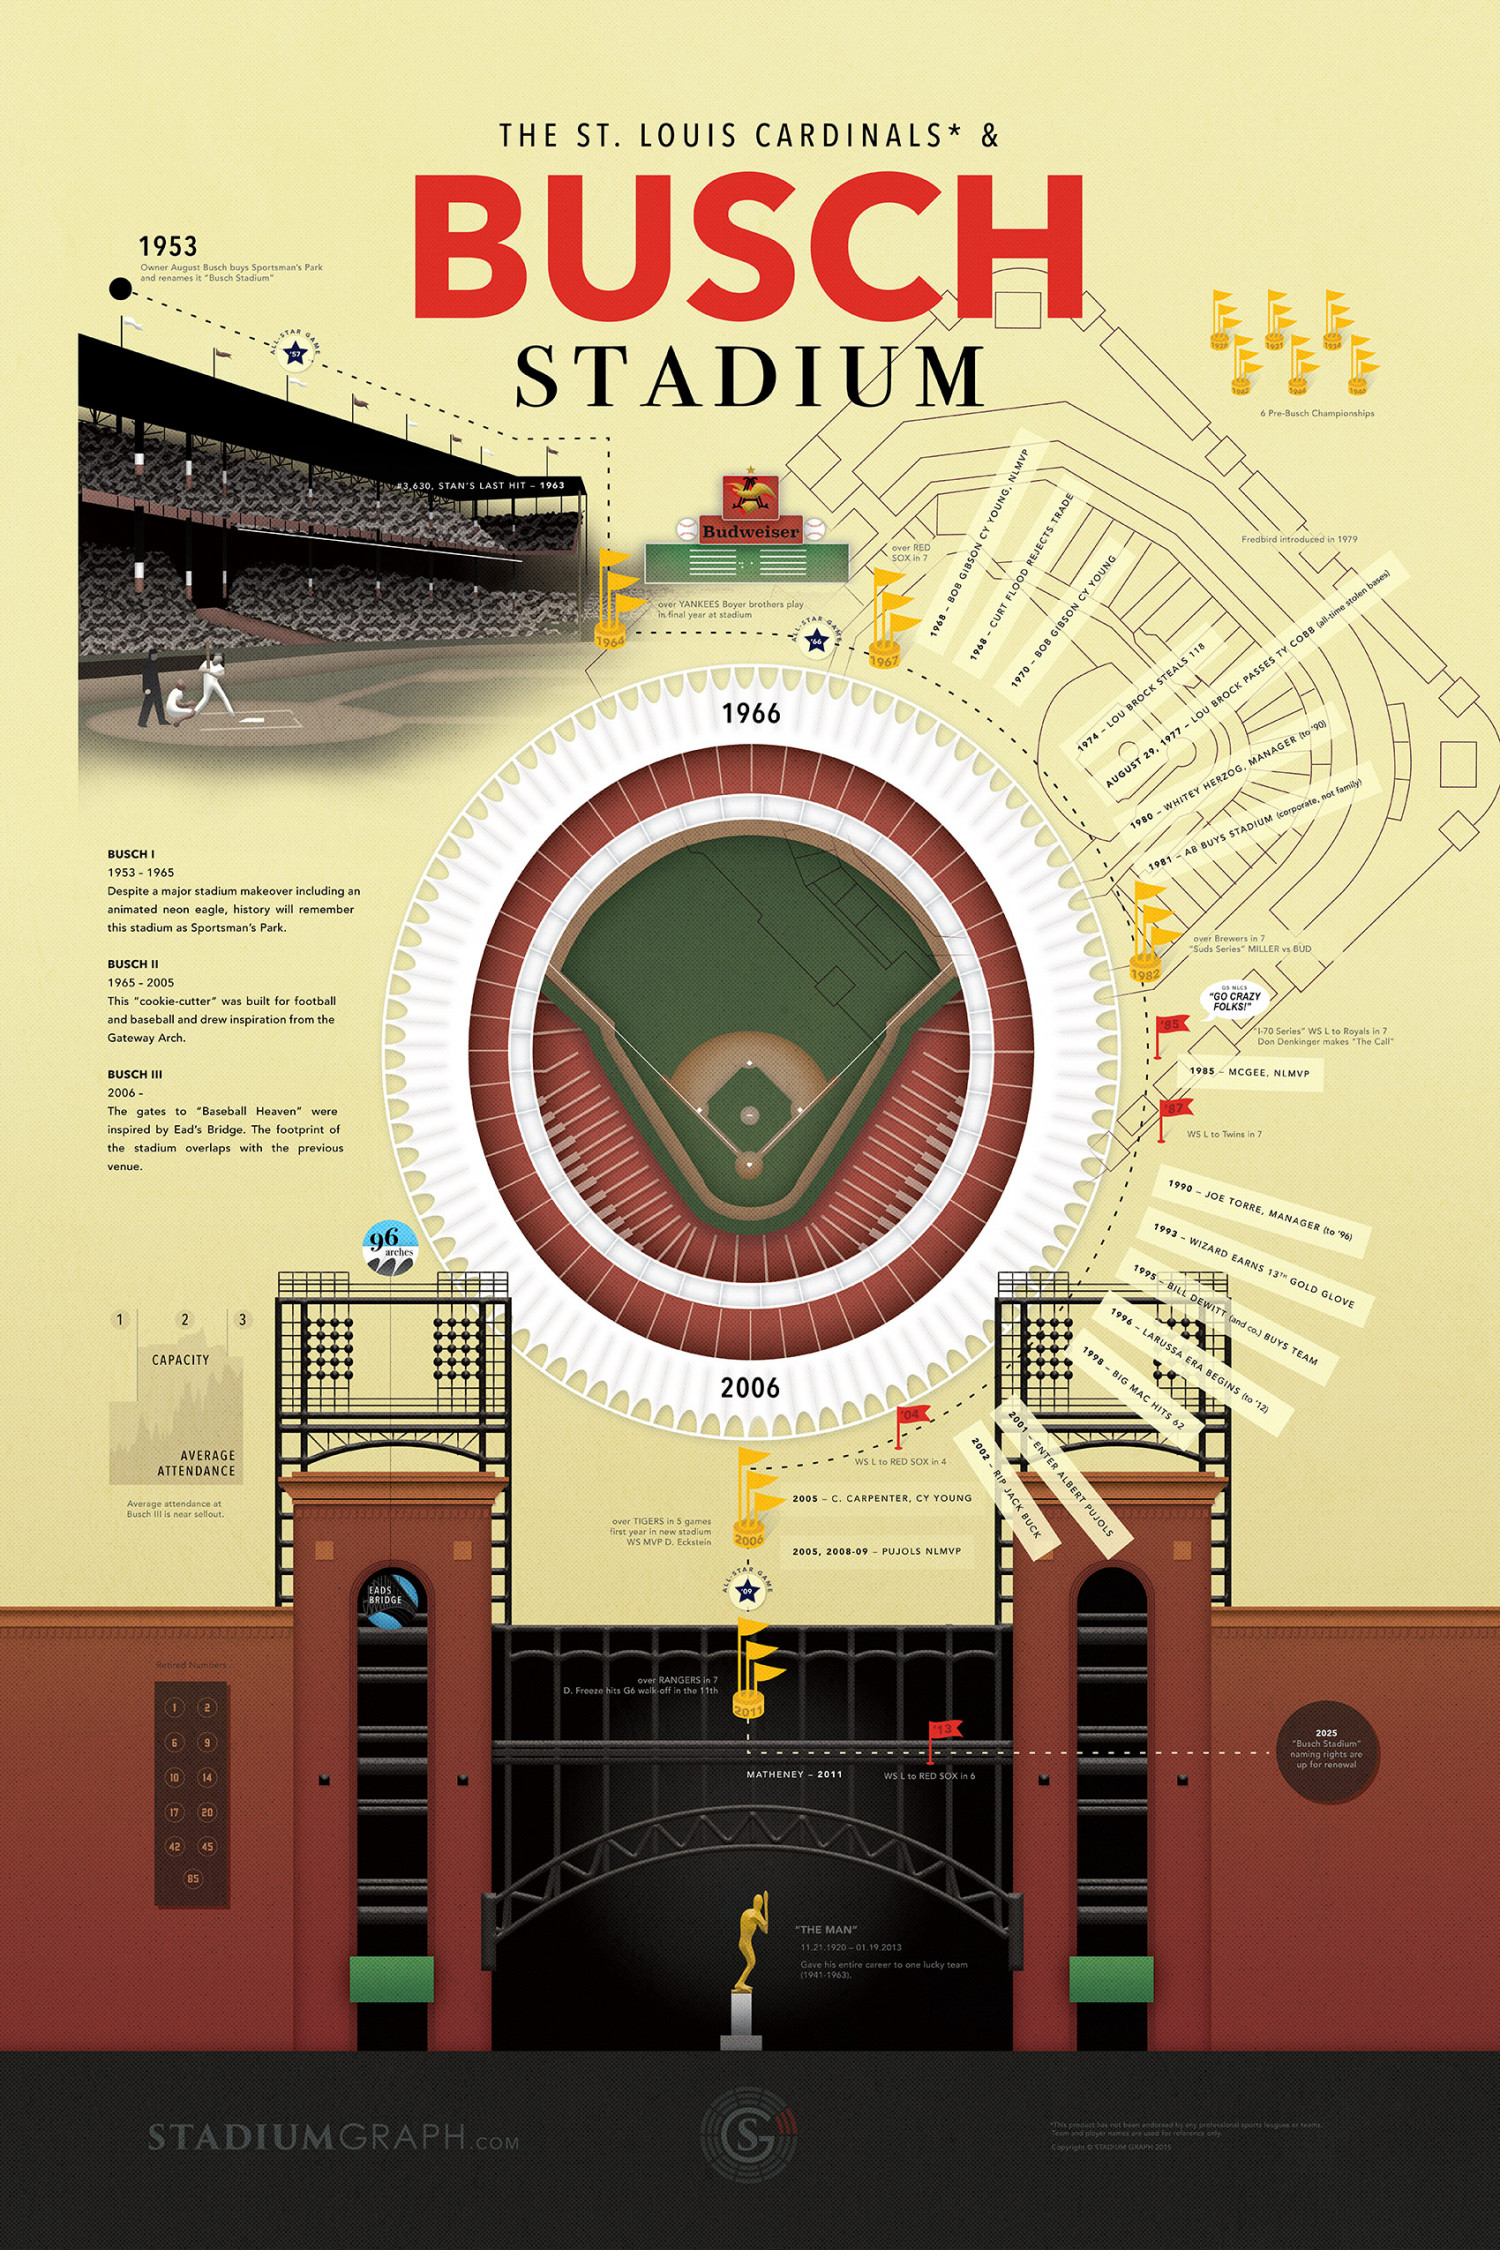 The St. Louis Cardinals & Busch Stadium Infographic